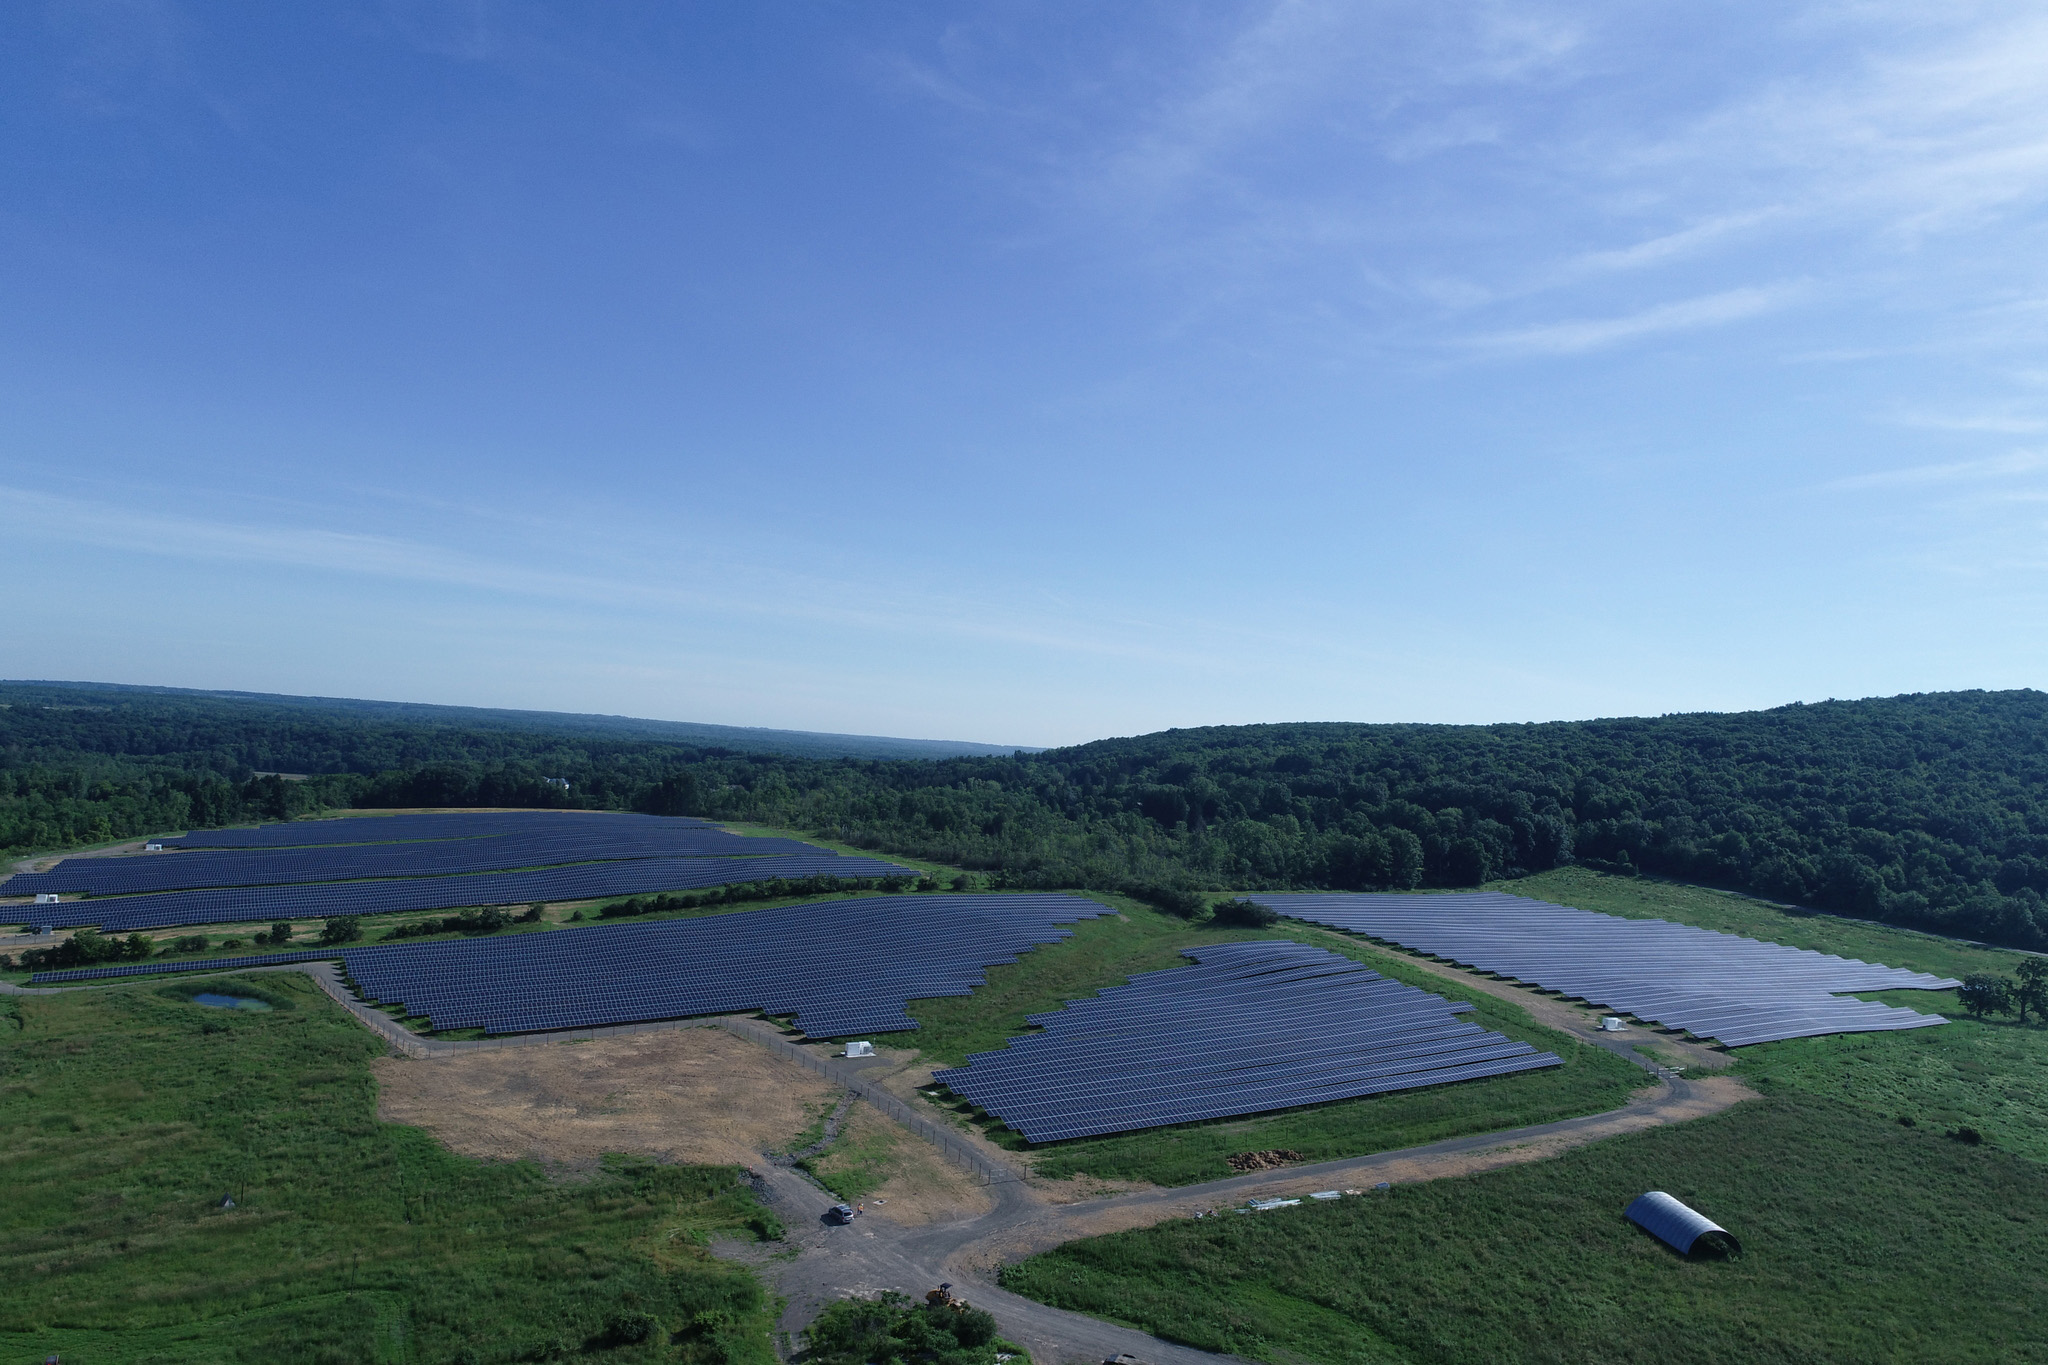 Cascadilla solar farm as seen from drone